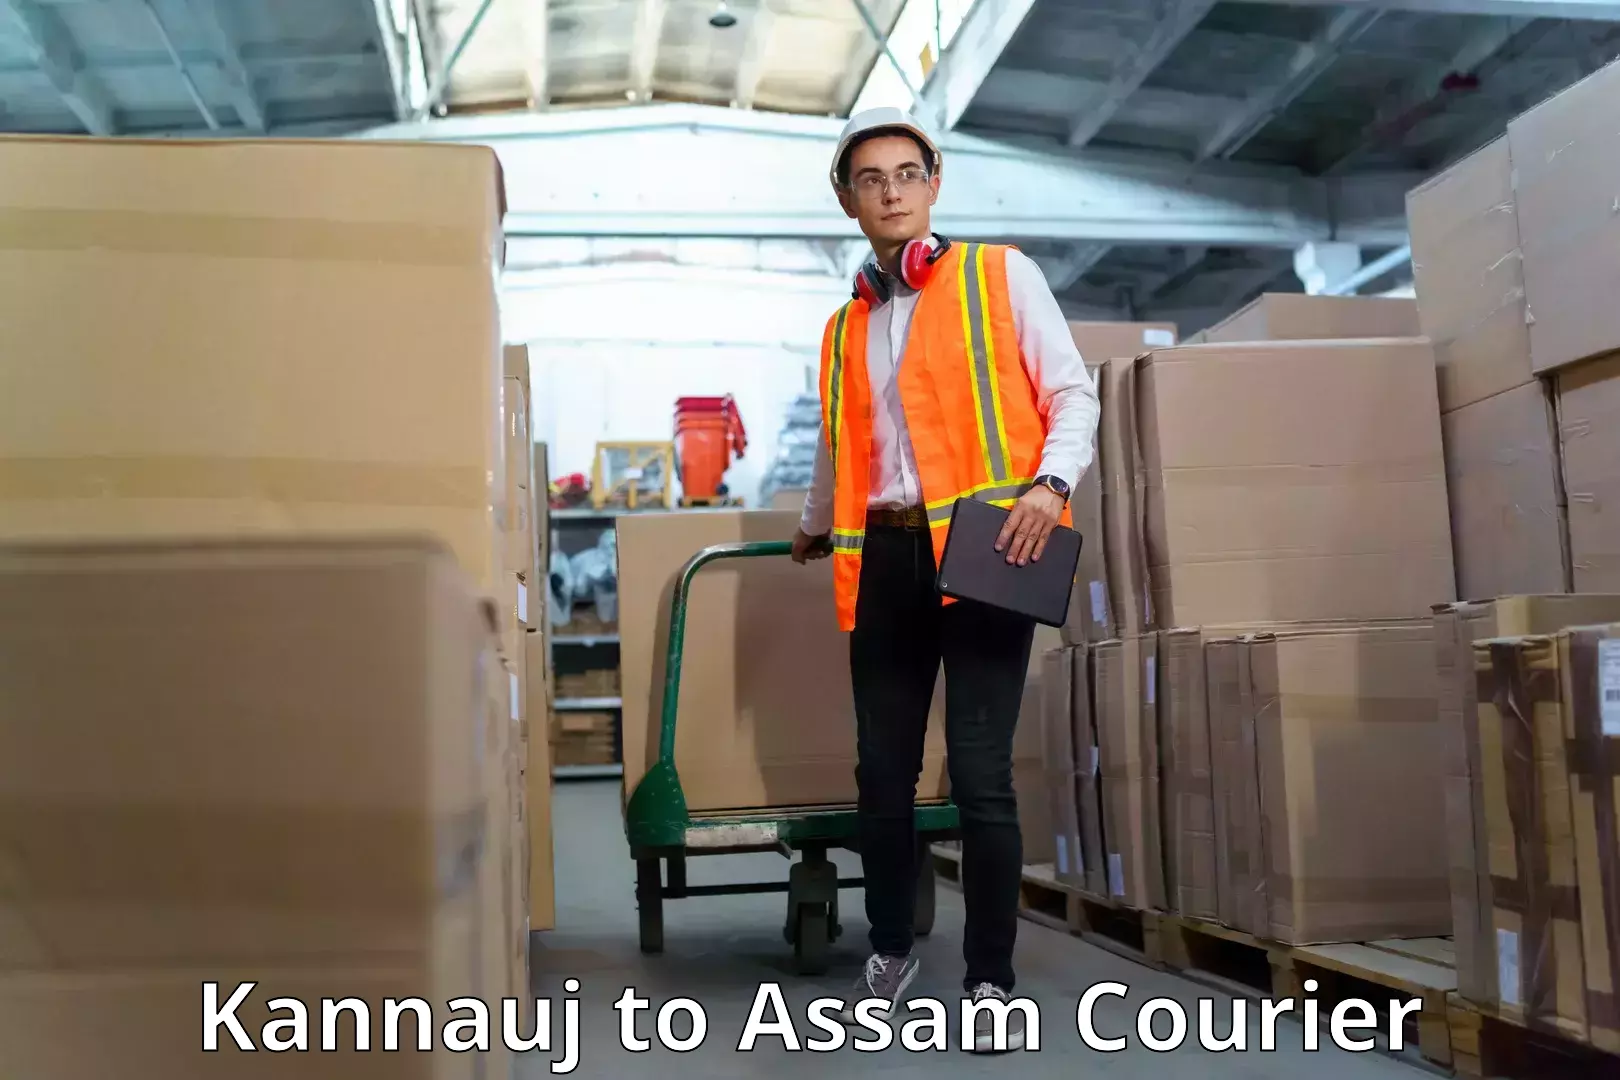 Global logistics network Kannauj to Assam